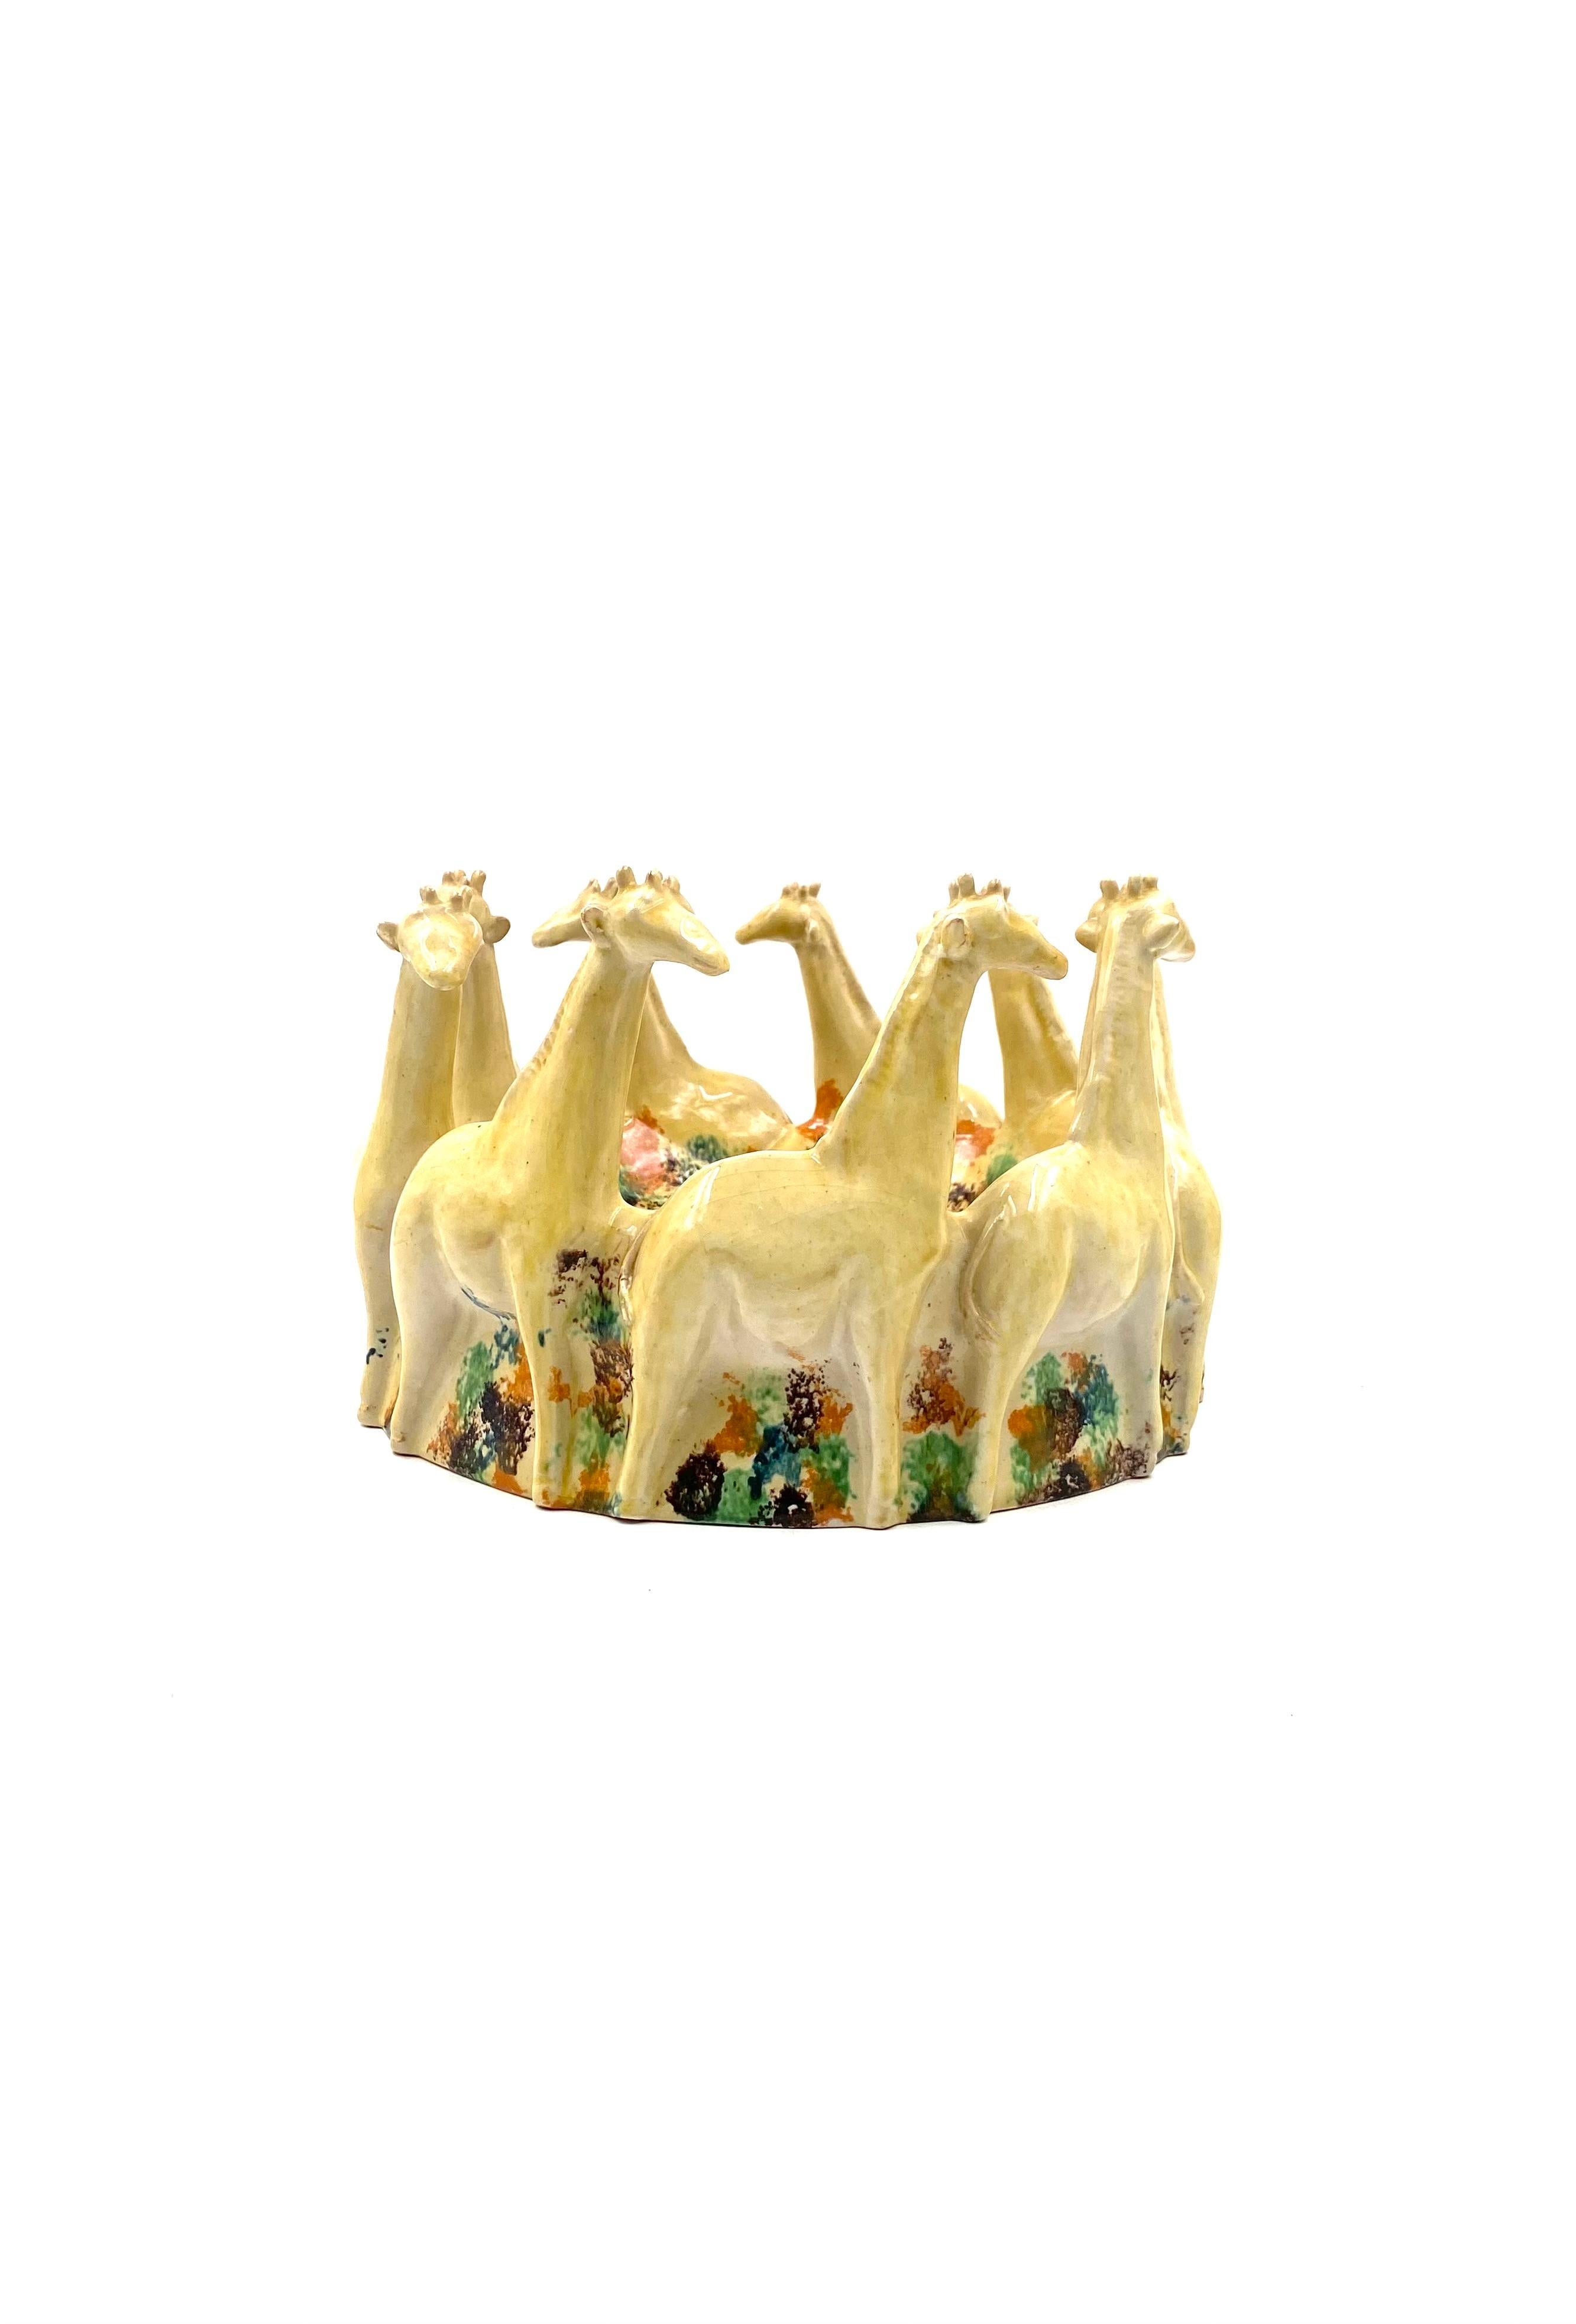 Postmodern giraffe ceramic centerpiece / vide poche, ND Dolfi Italy, 1990s For Sale 6